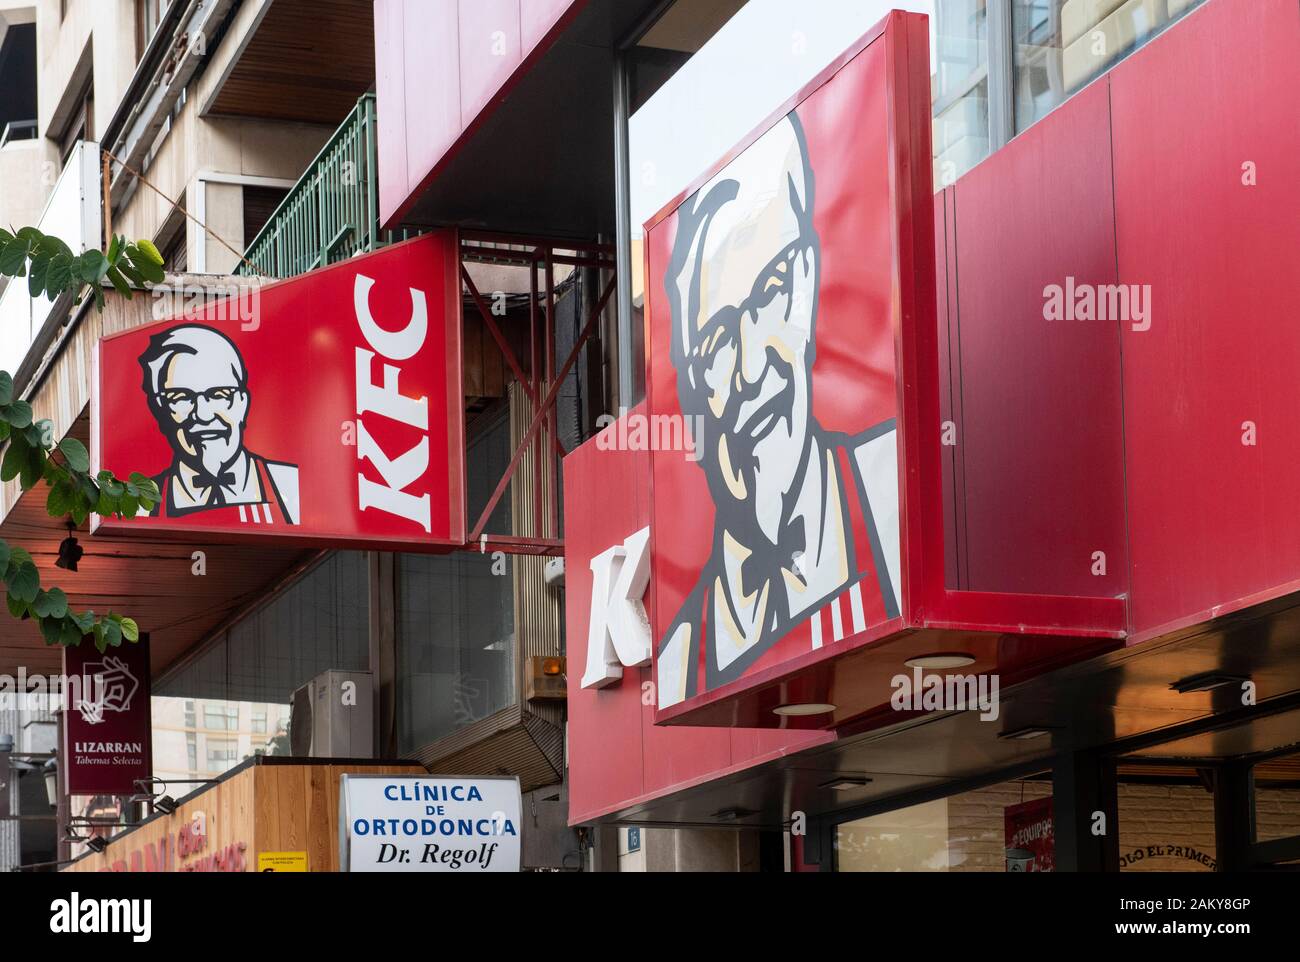 American fast food chicken restaurant chain Kentucky Fried Chicken KFC restaurant and logo seen in Spain. Stock Photo